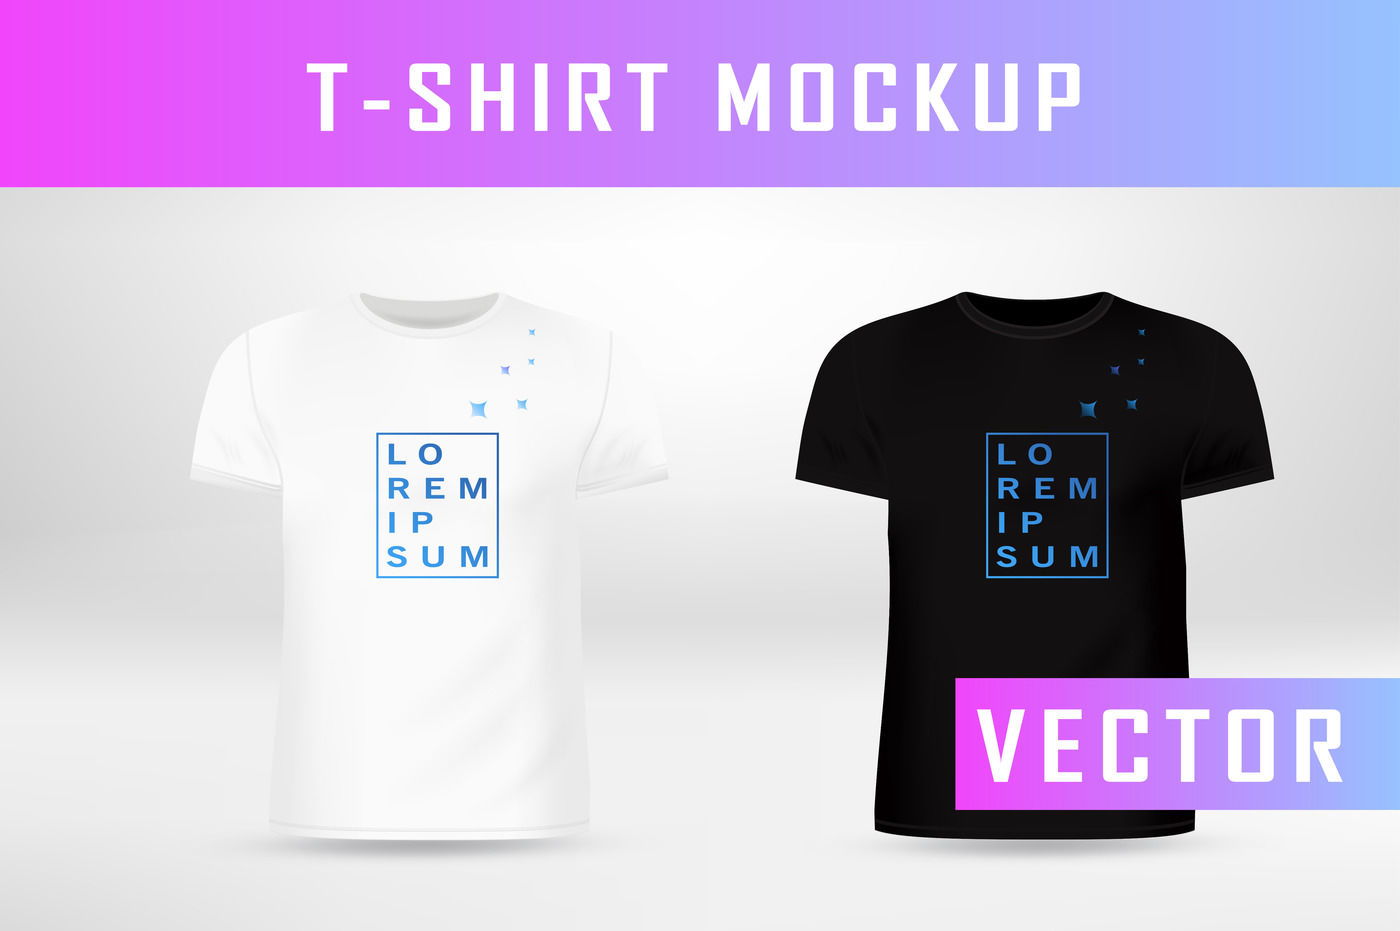  T  shirt  Mockup Vector  PSD  file By Deno TheHungryJPEG com